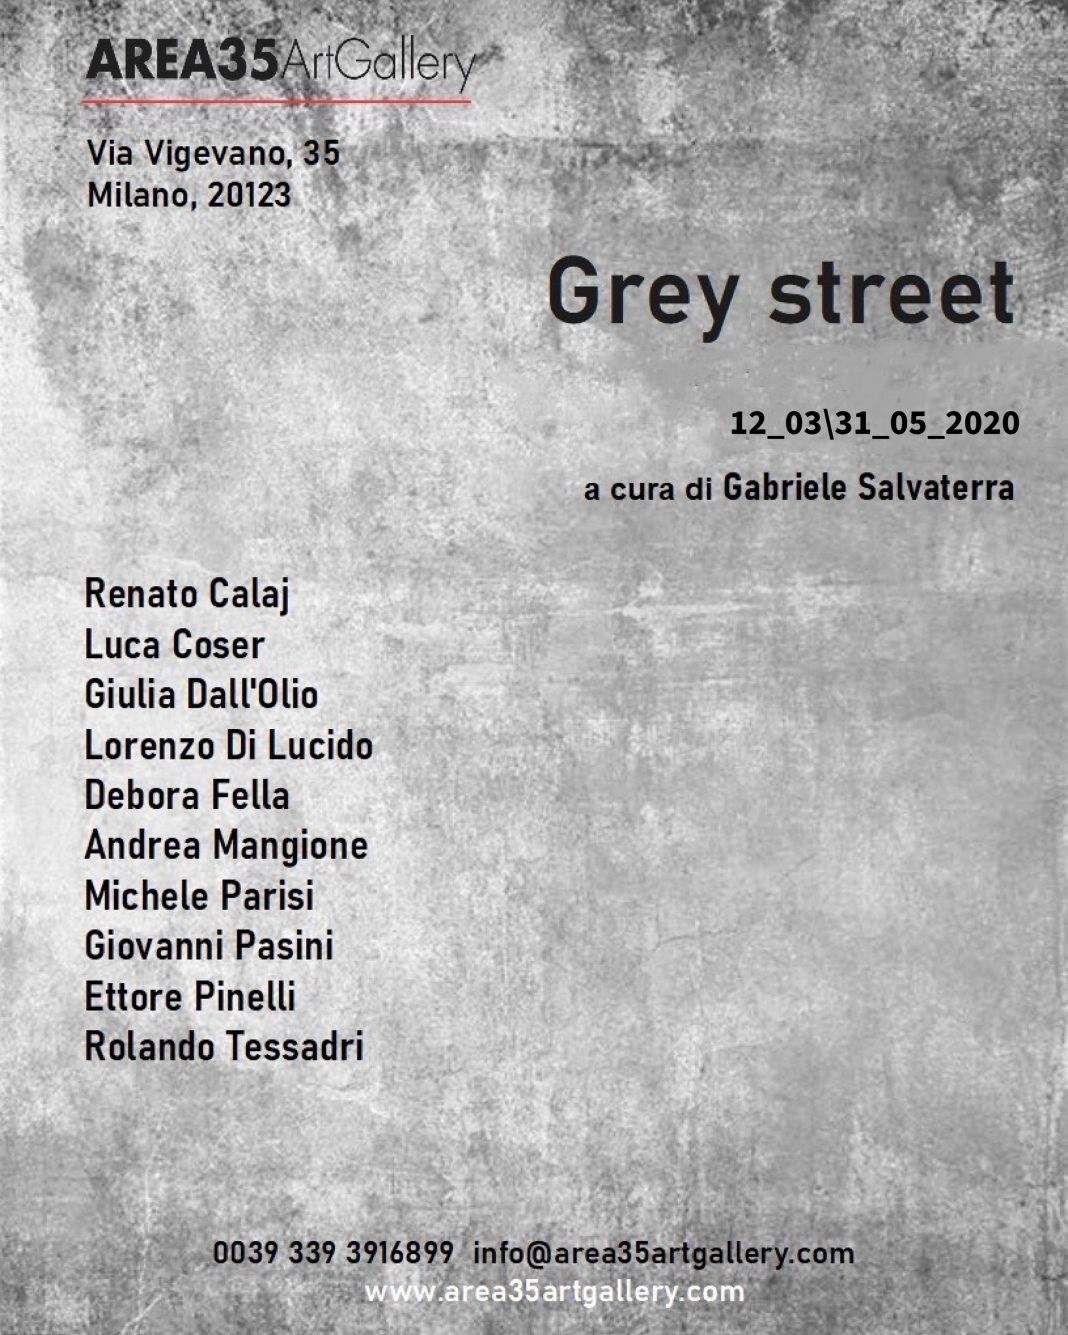 Grey street (ora solo online)https://www.exibart.com/repository/media/formidable/11/Locandina-1-300-1-1068x1335.jpg